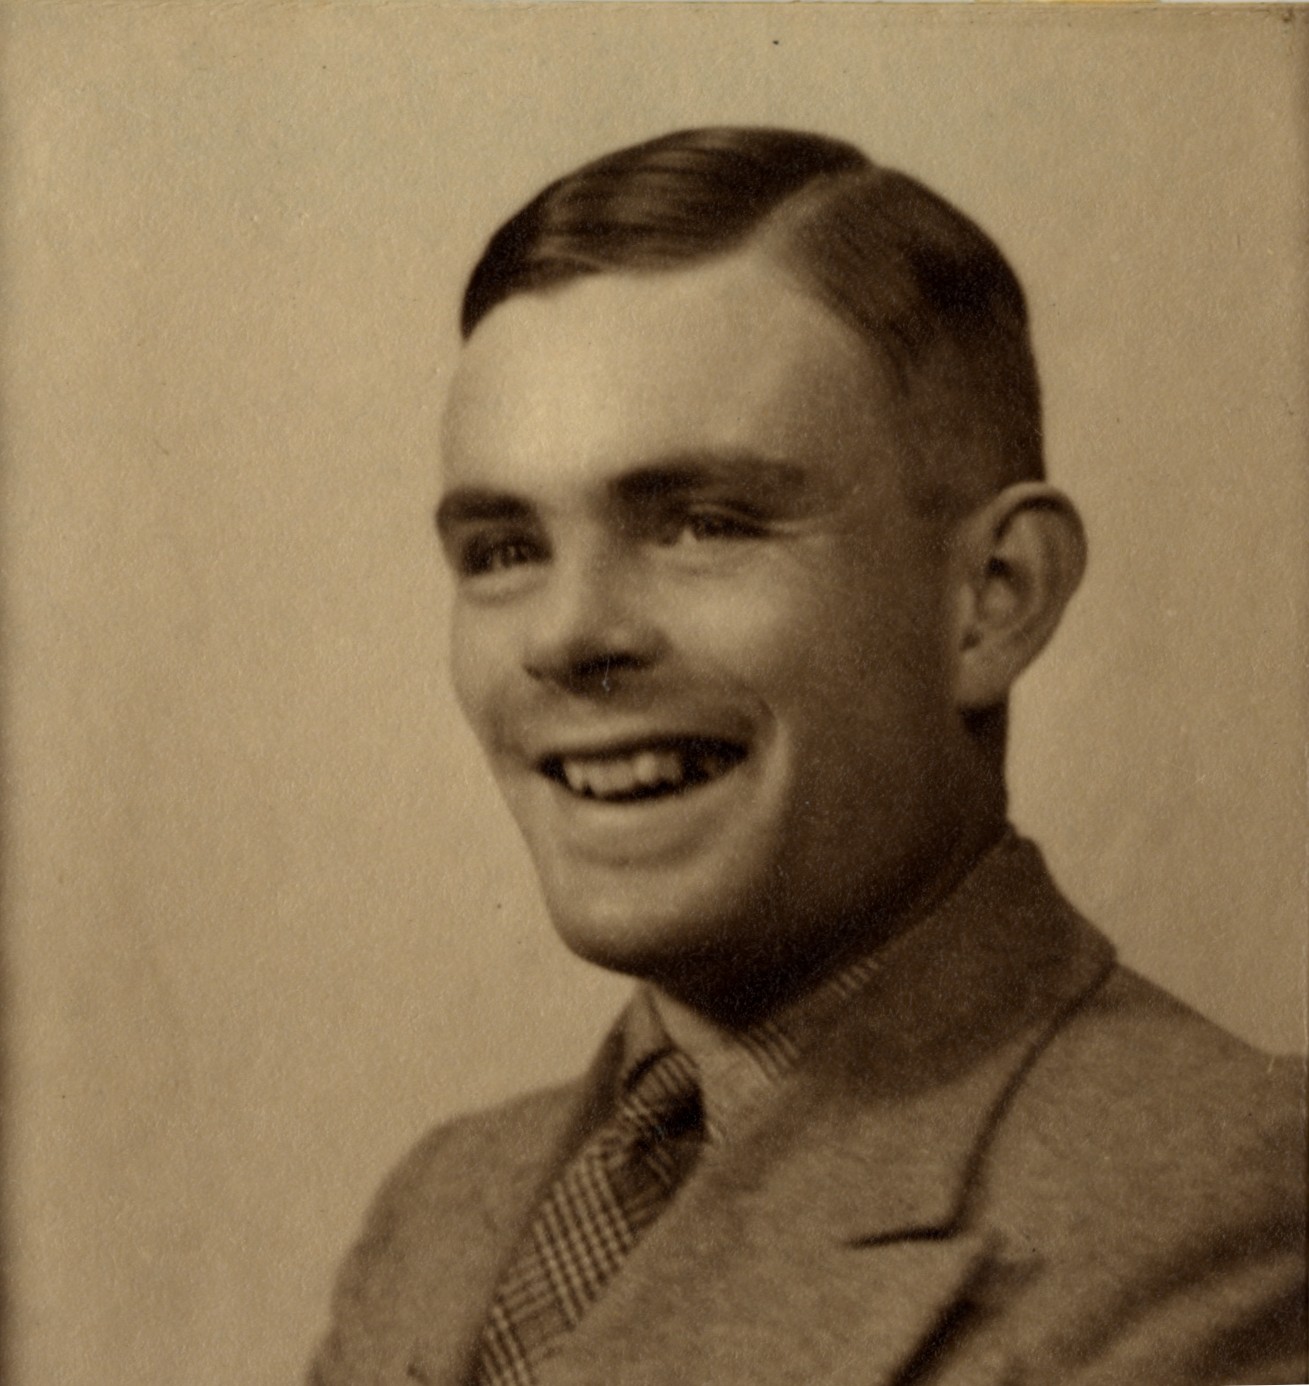 Alan Mathison Turing passport-style photograph [AMT/K/7/11]